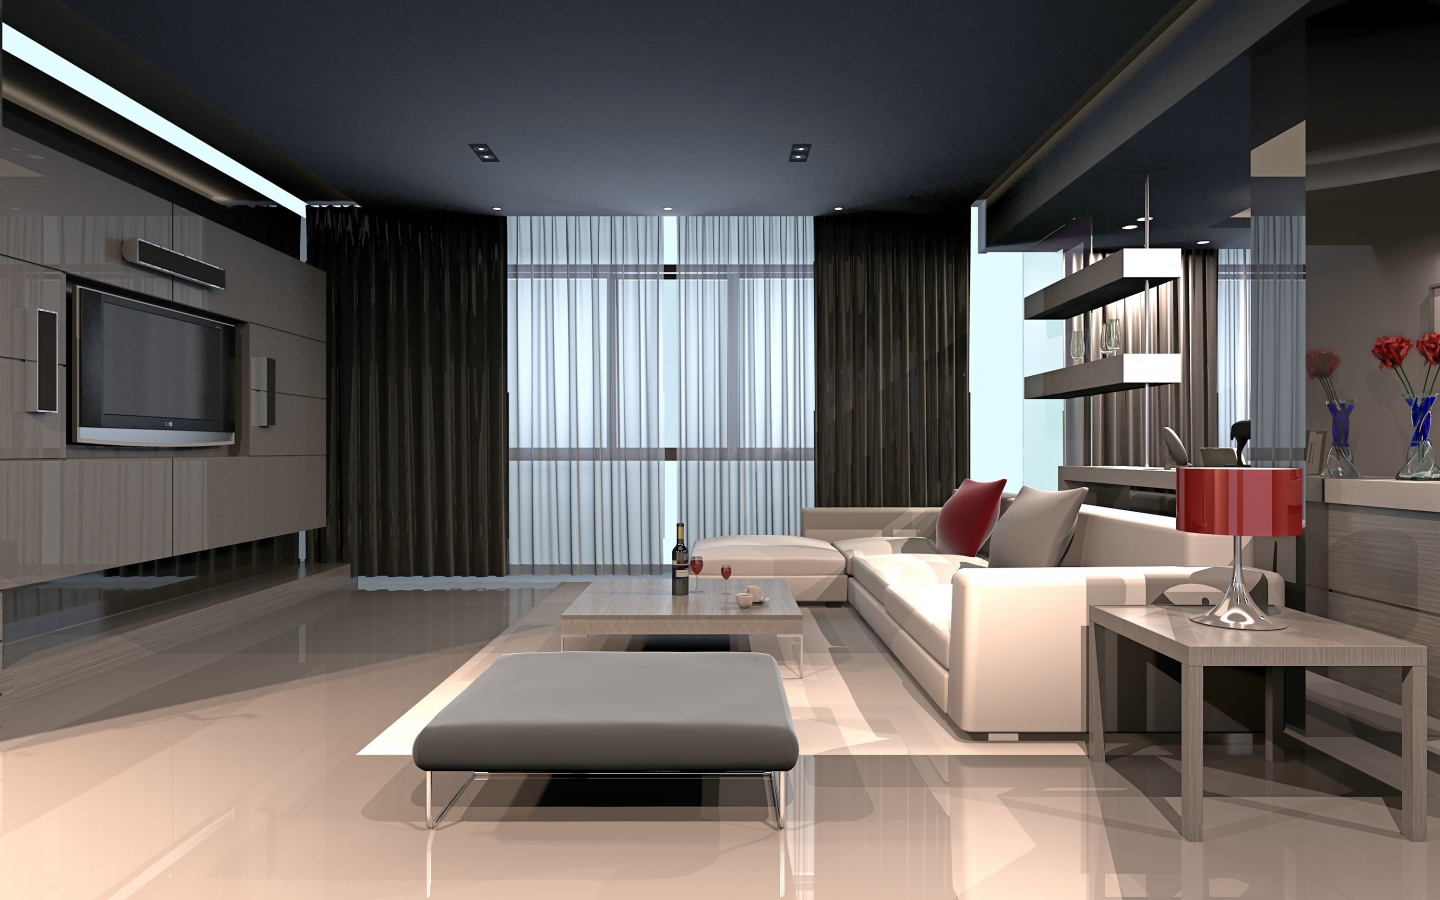 Spectacular Living Room Design 1440 x 900 widescreen Wallpaper